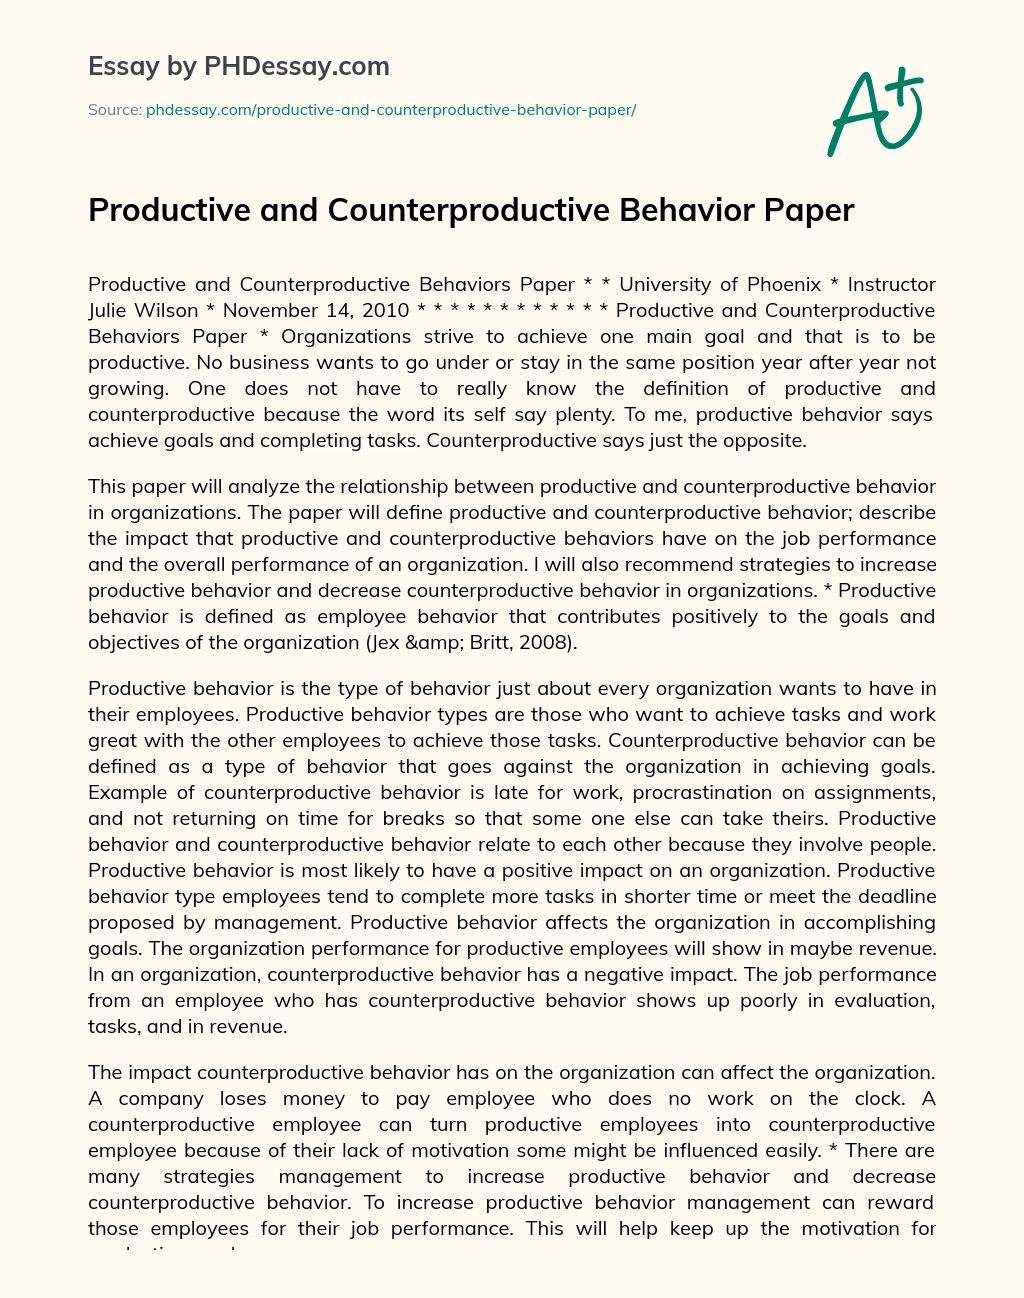 Productive and Counterproductive Behavior Paper essay